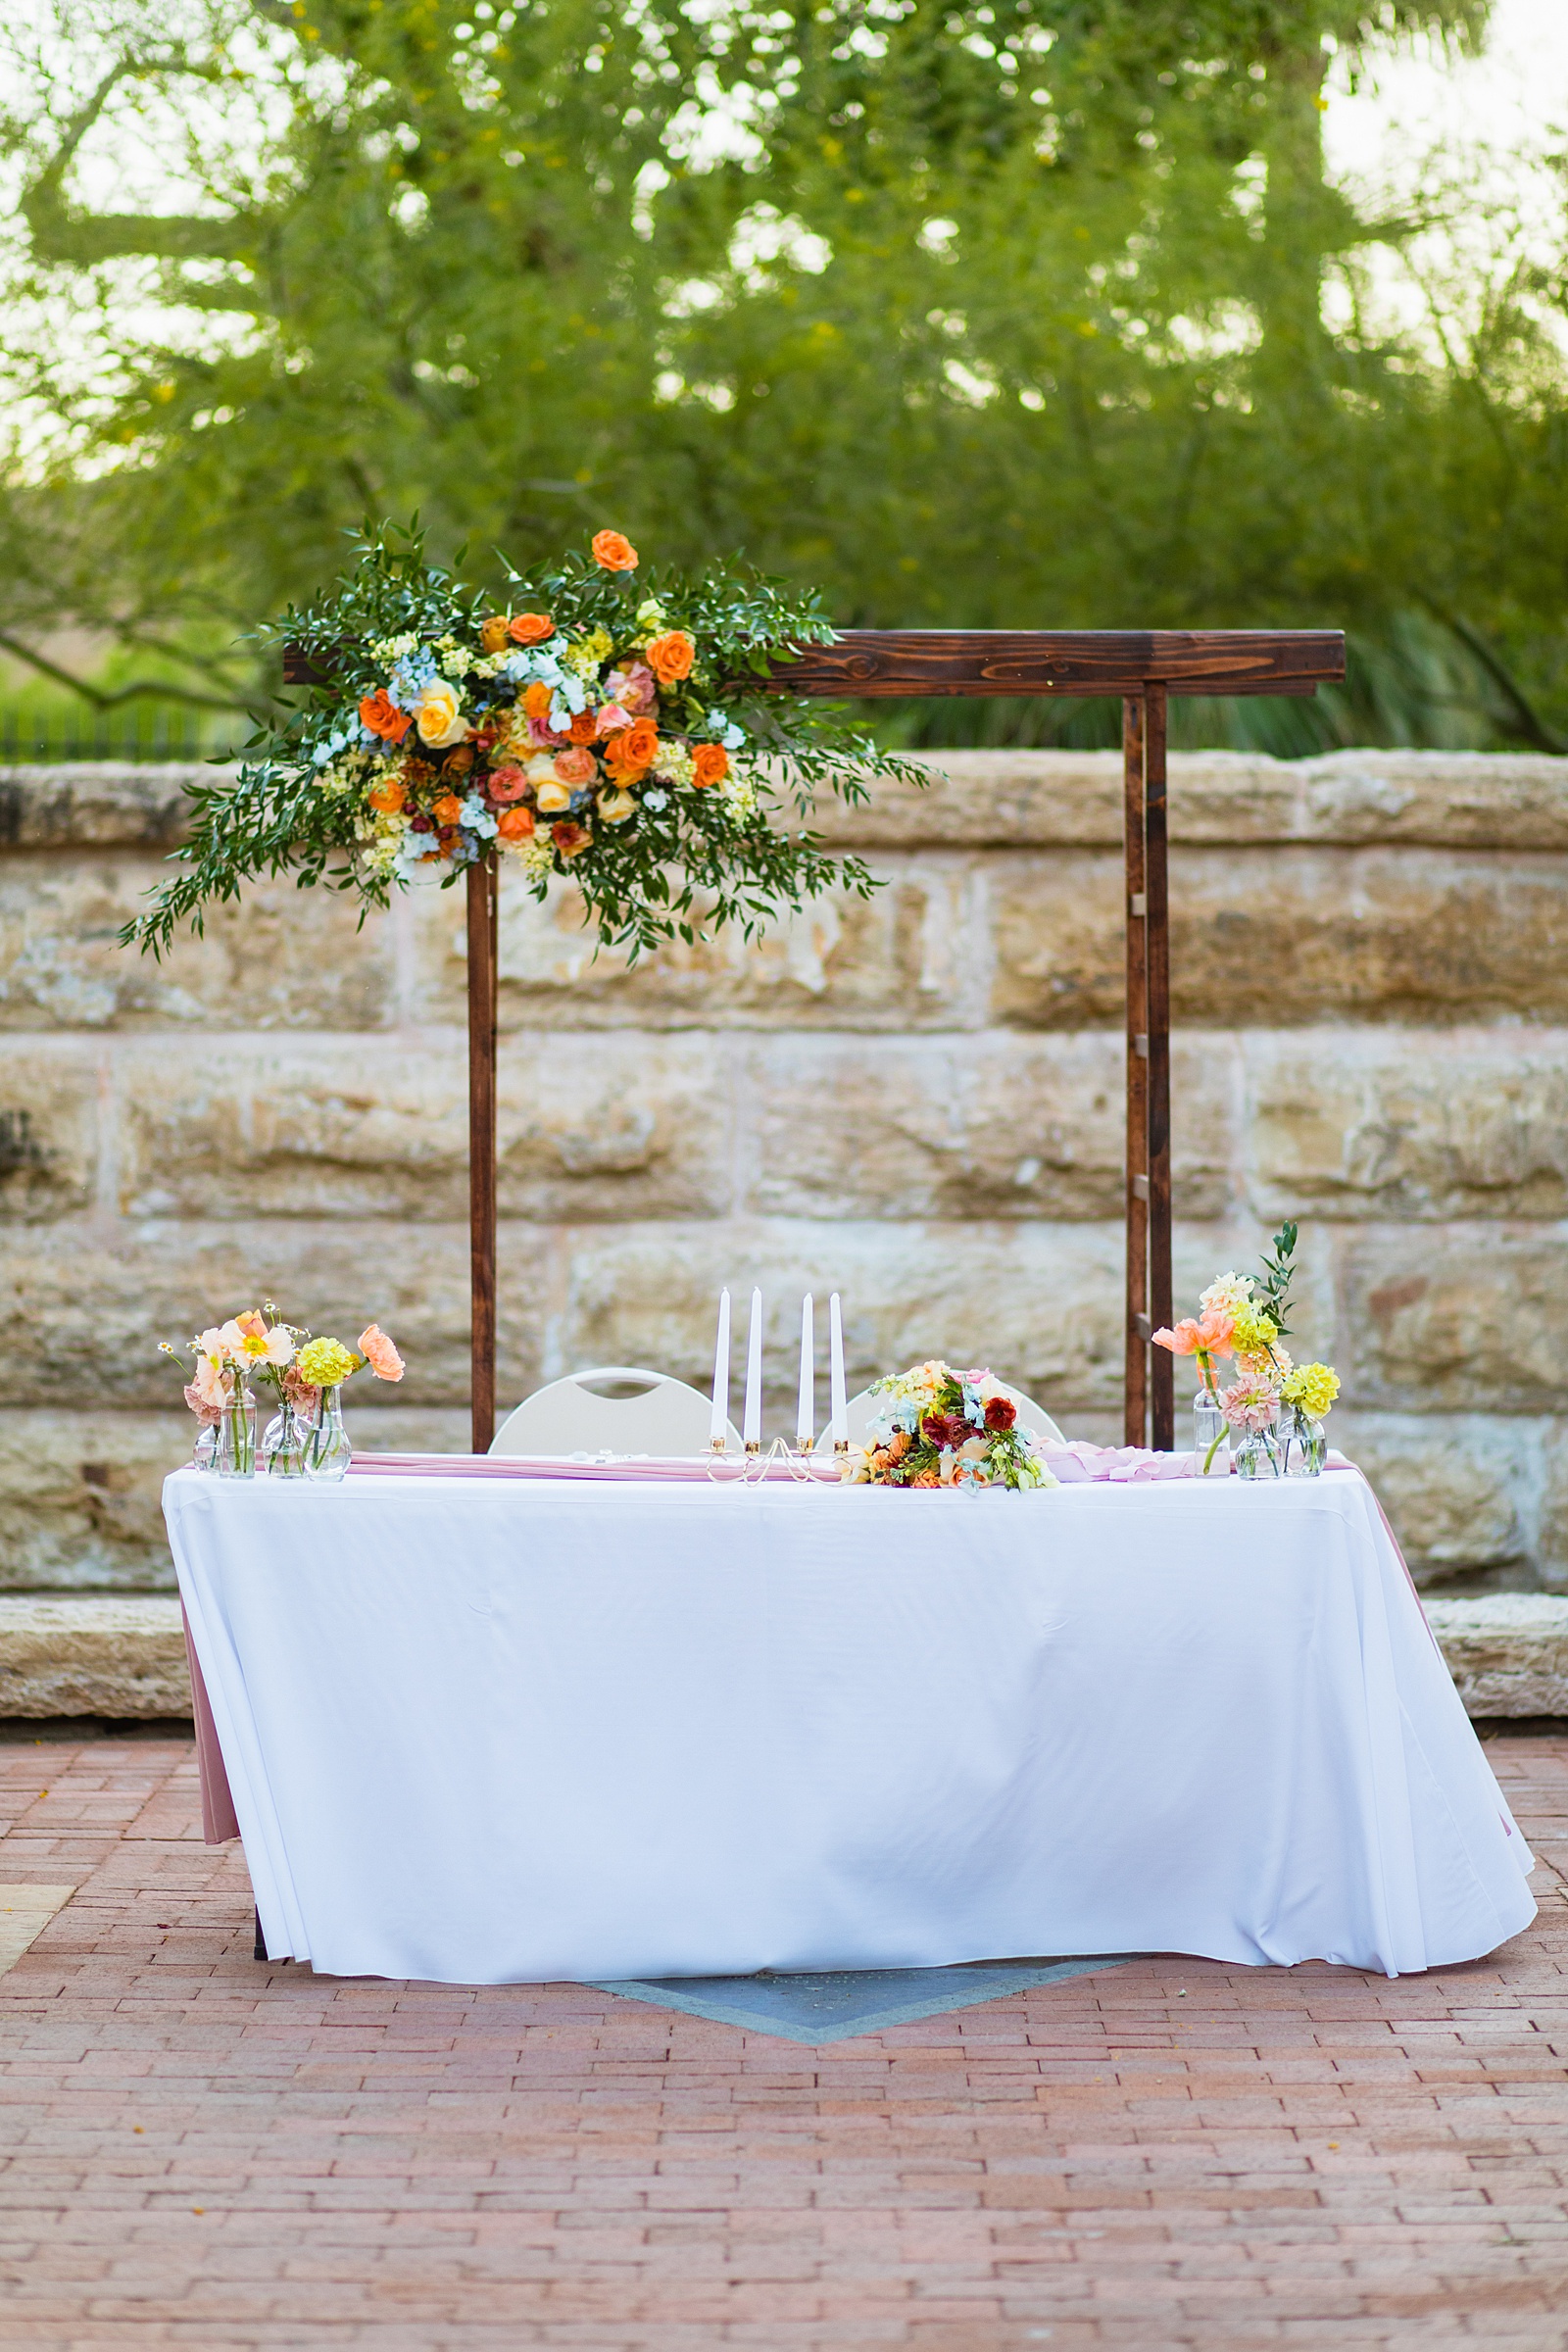 Sweetheart table at Arizona Historical Society wedding reception by Arizona wedding photographer PMA Photography.